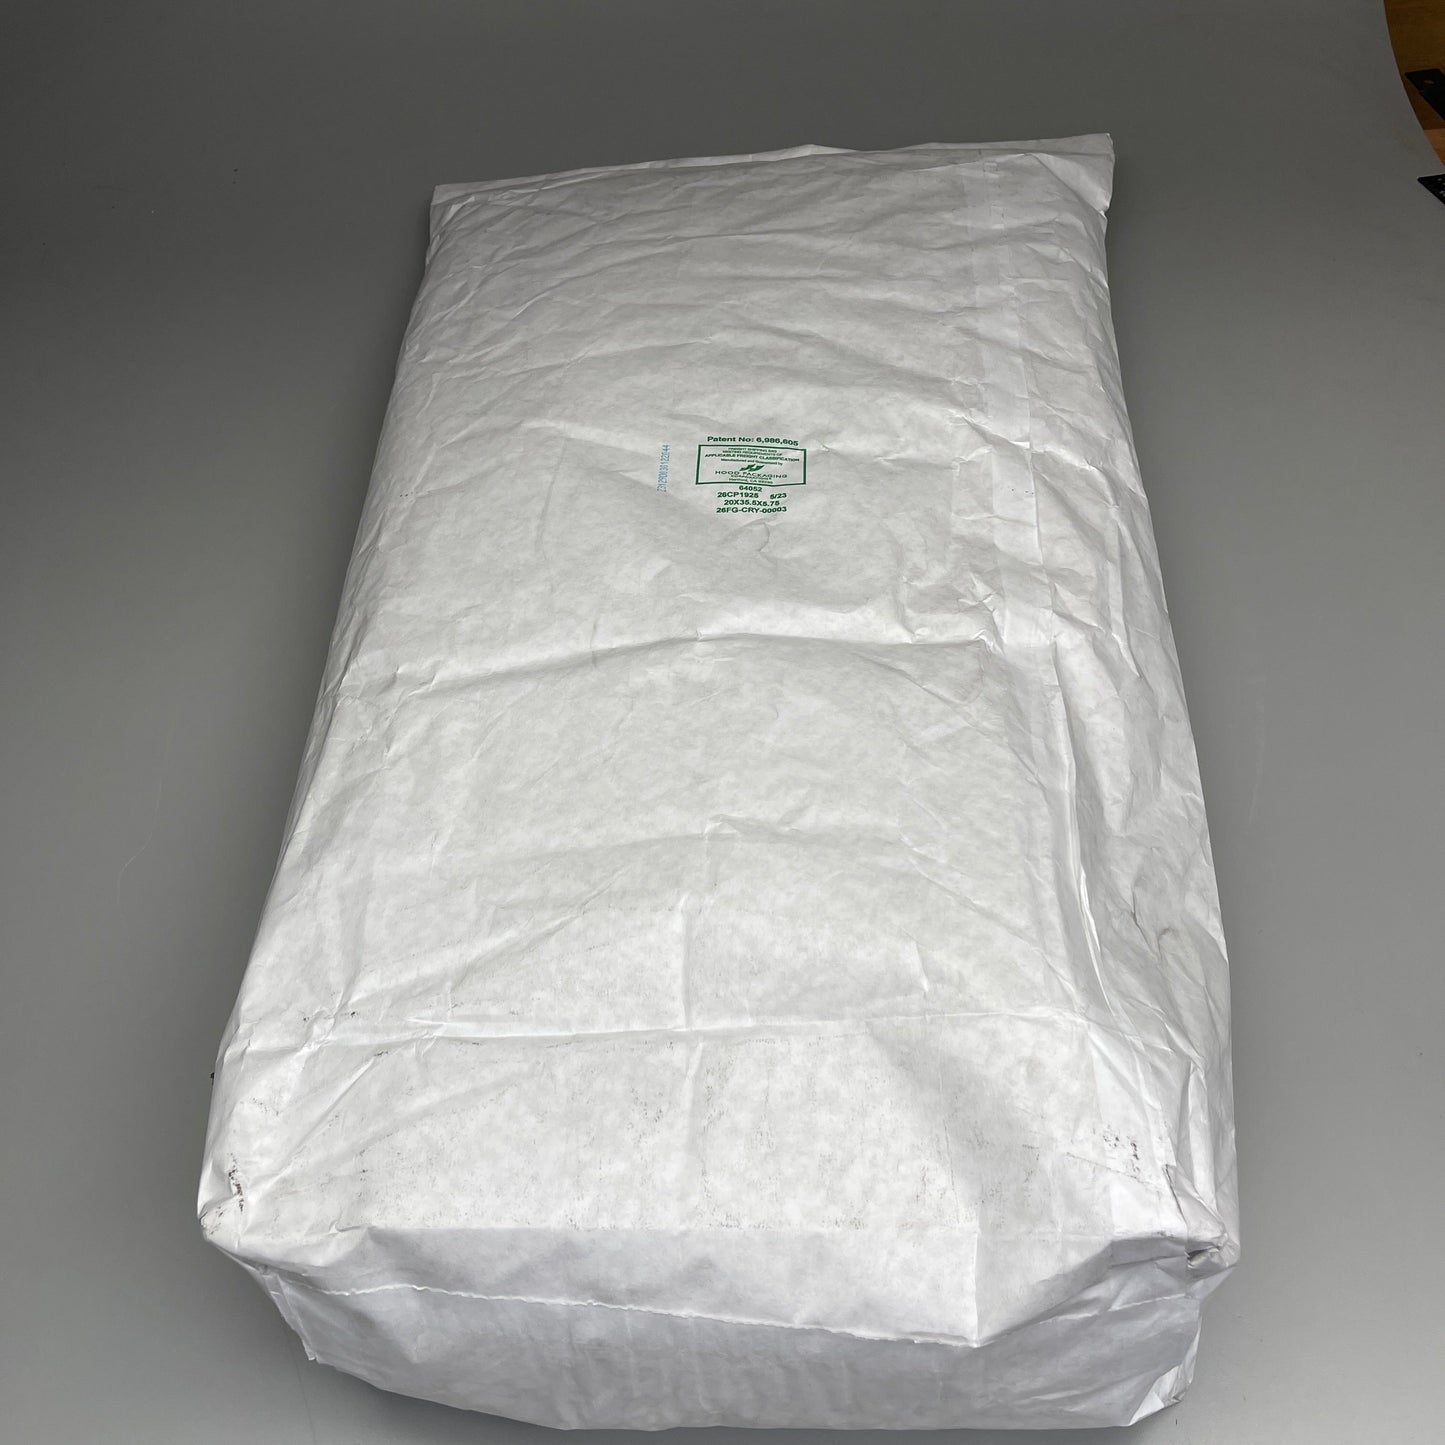 HUMBOLDT CREAMERY Organic Non Fat Powdered Dry Milk  50 lb bag